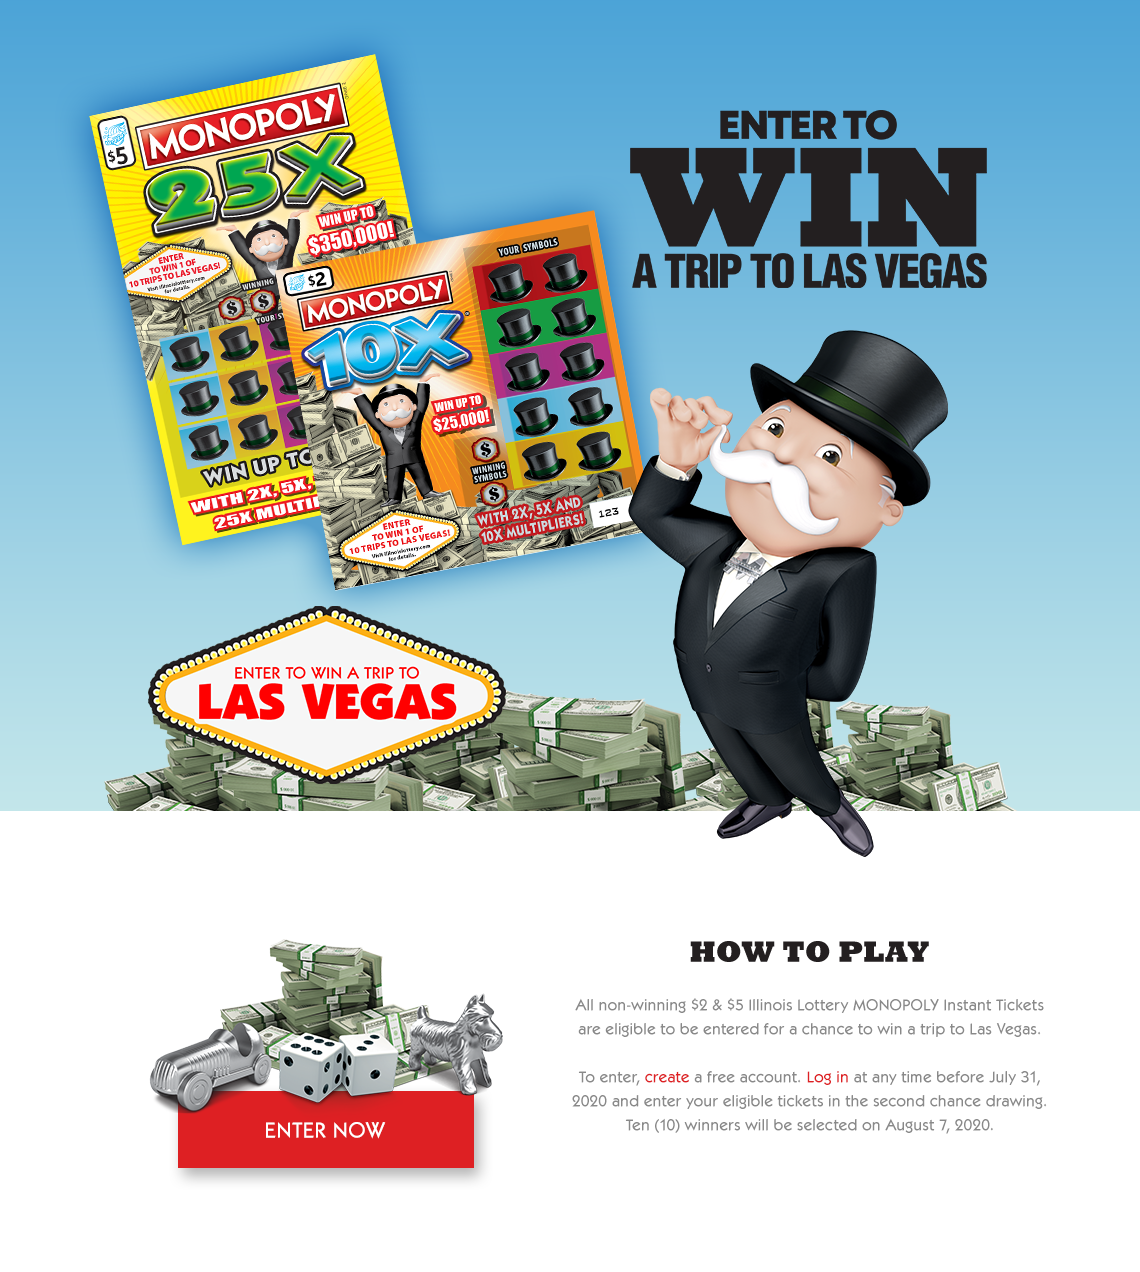 Enter to win a trip to Las Vegas